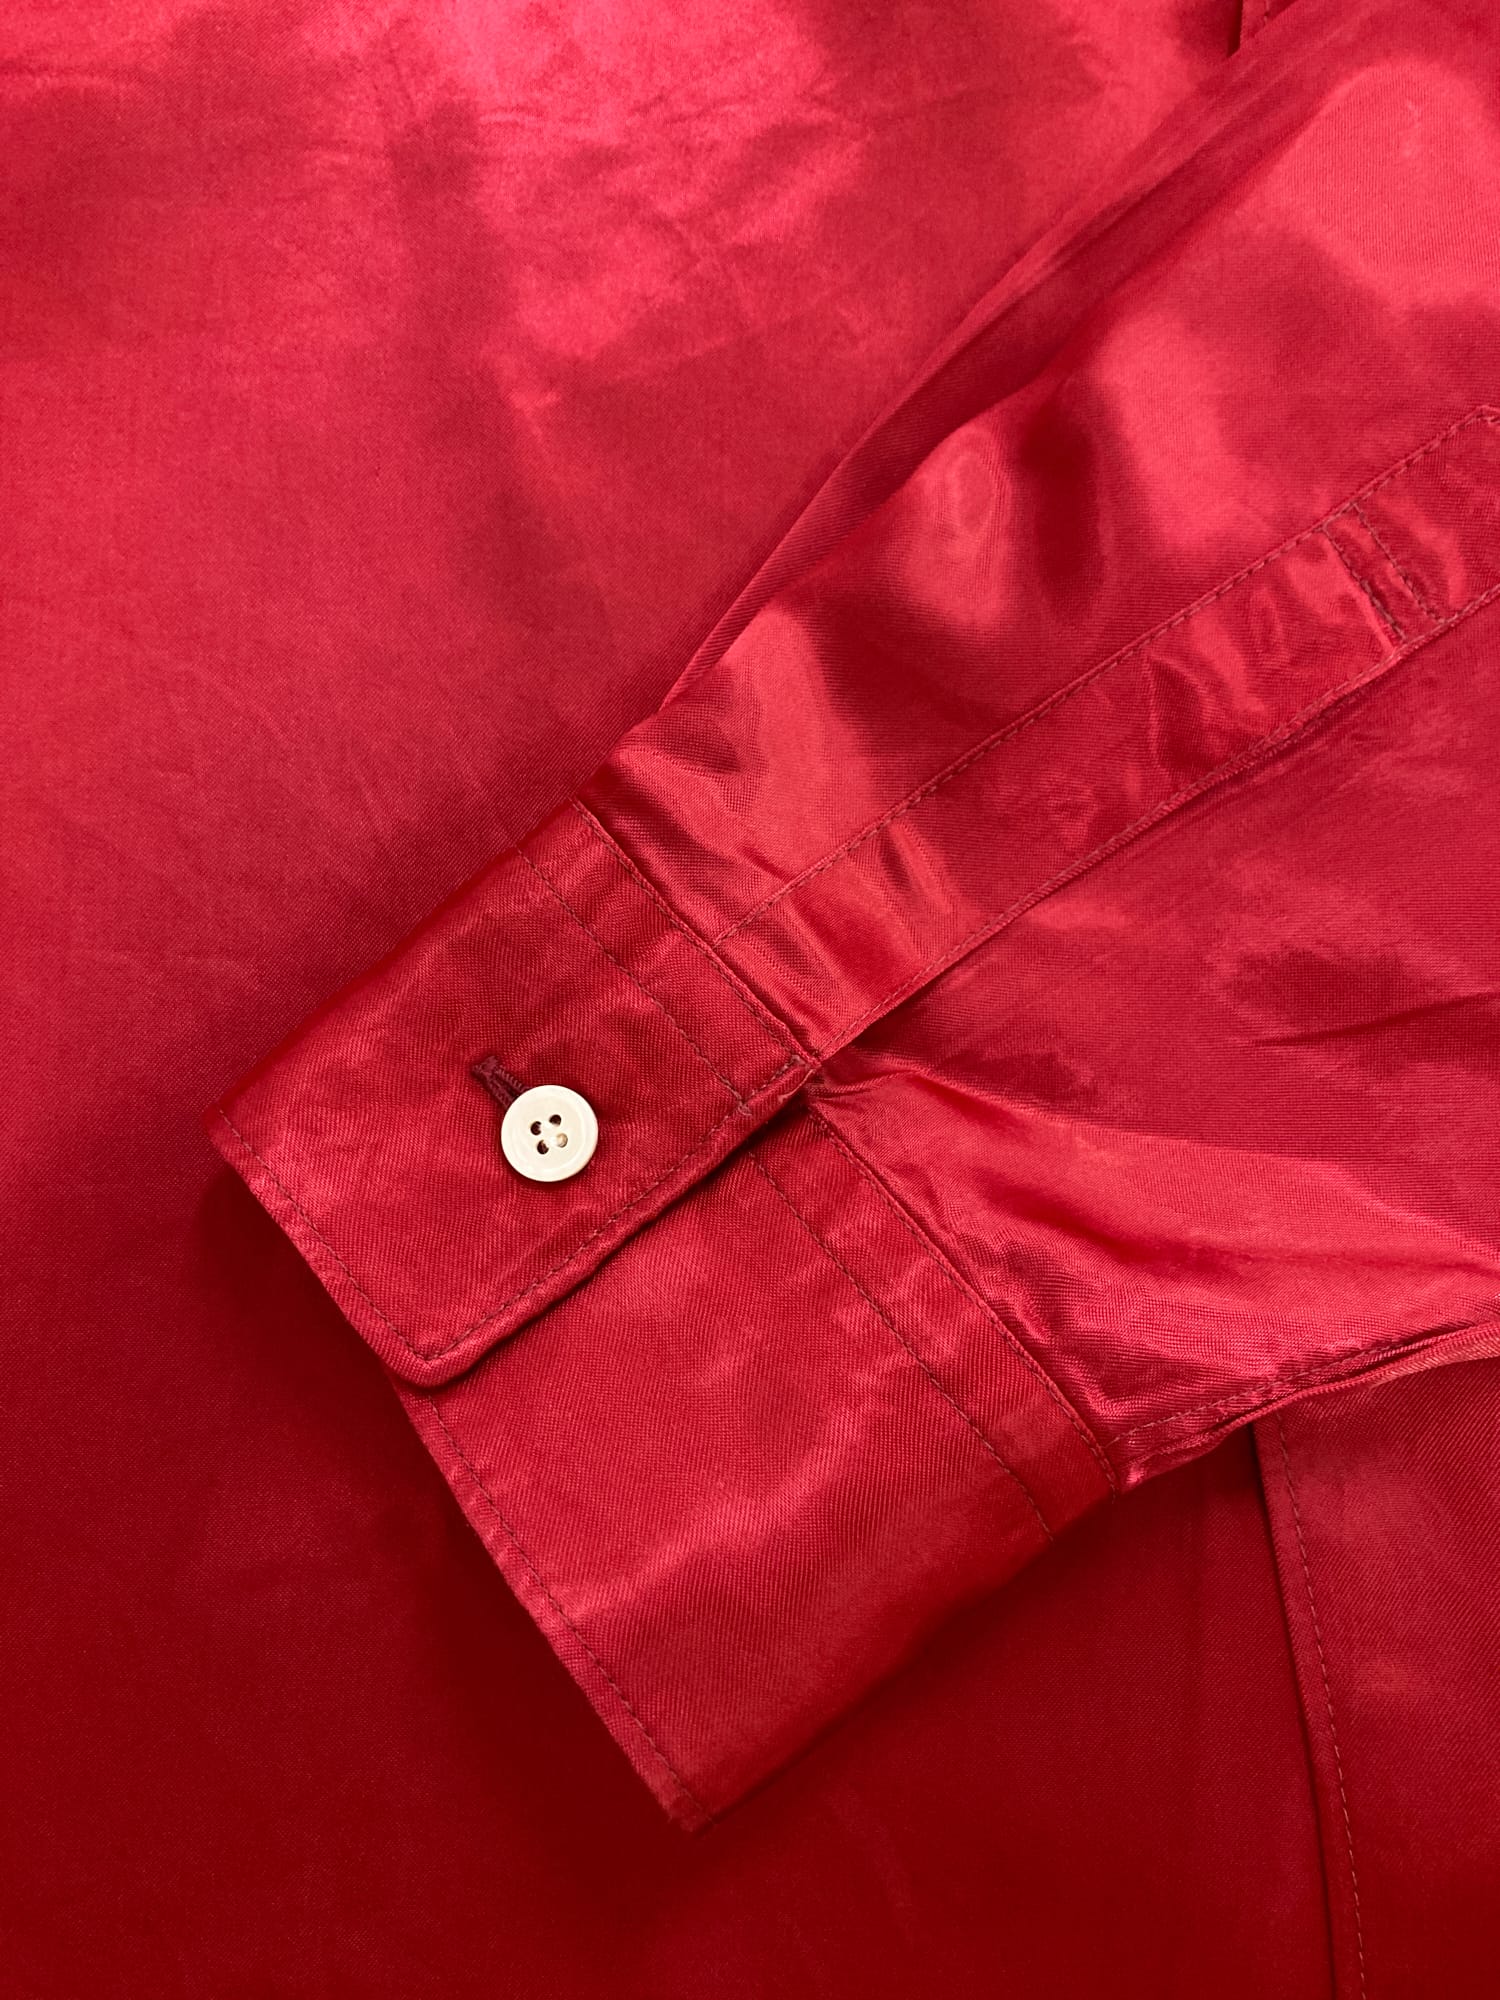 Comme des Garcons SS1995 red cupra satin shirt